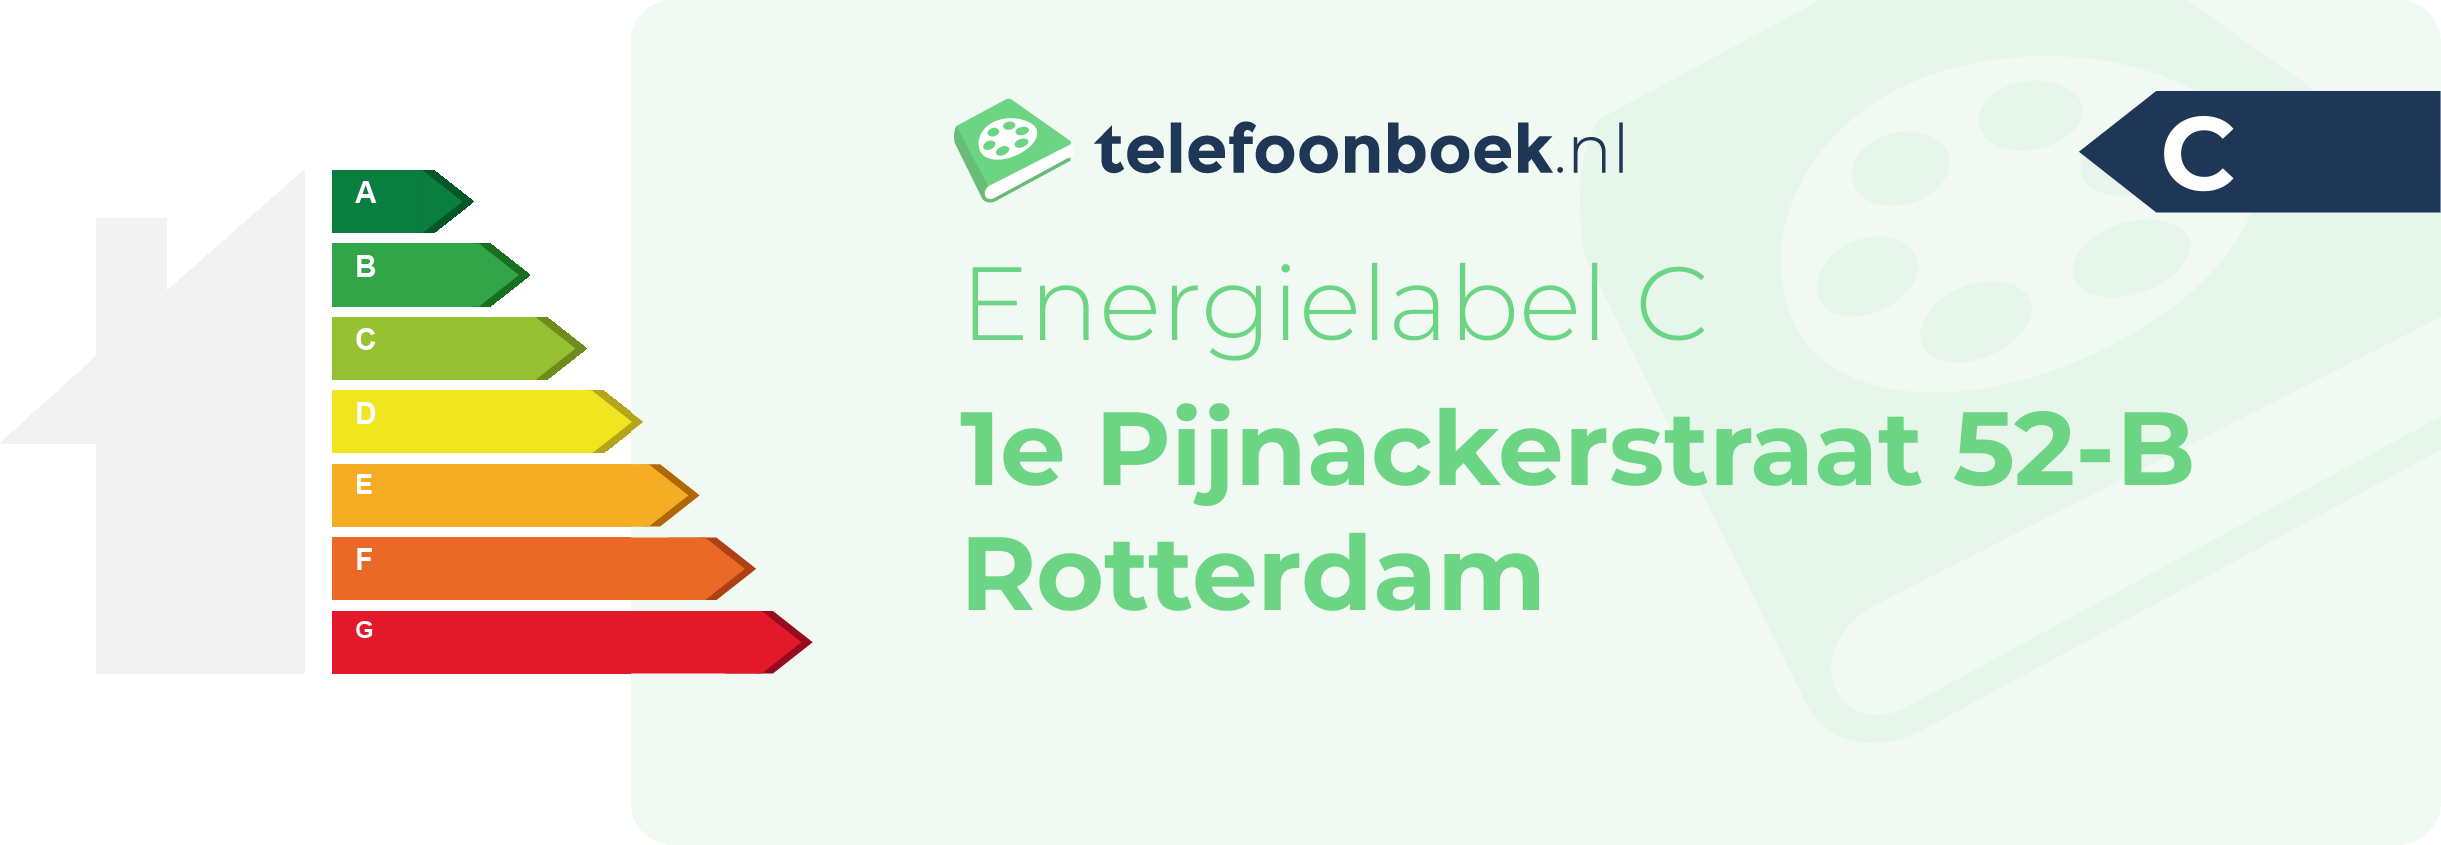 Energielabel 1e Pijnackerstraat 52-B Rotterdam